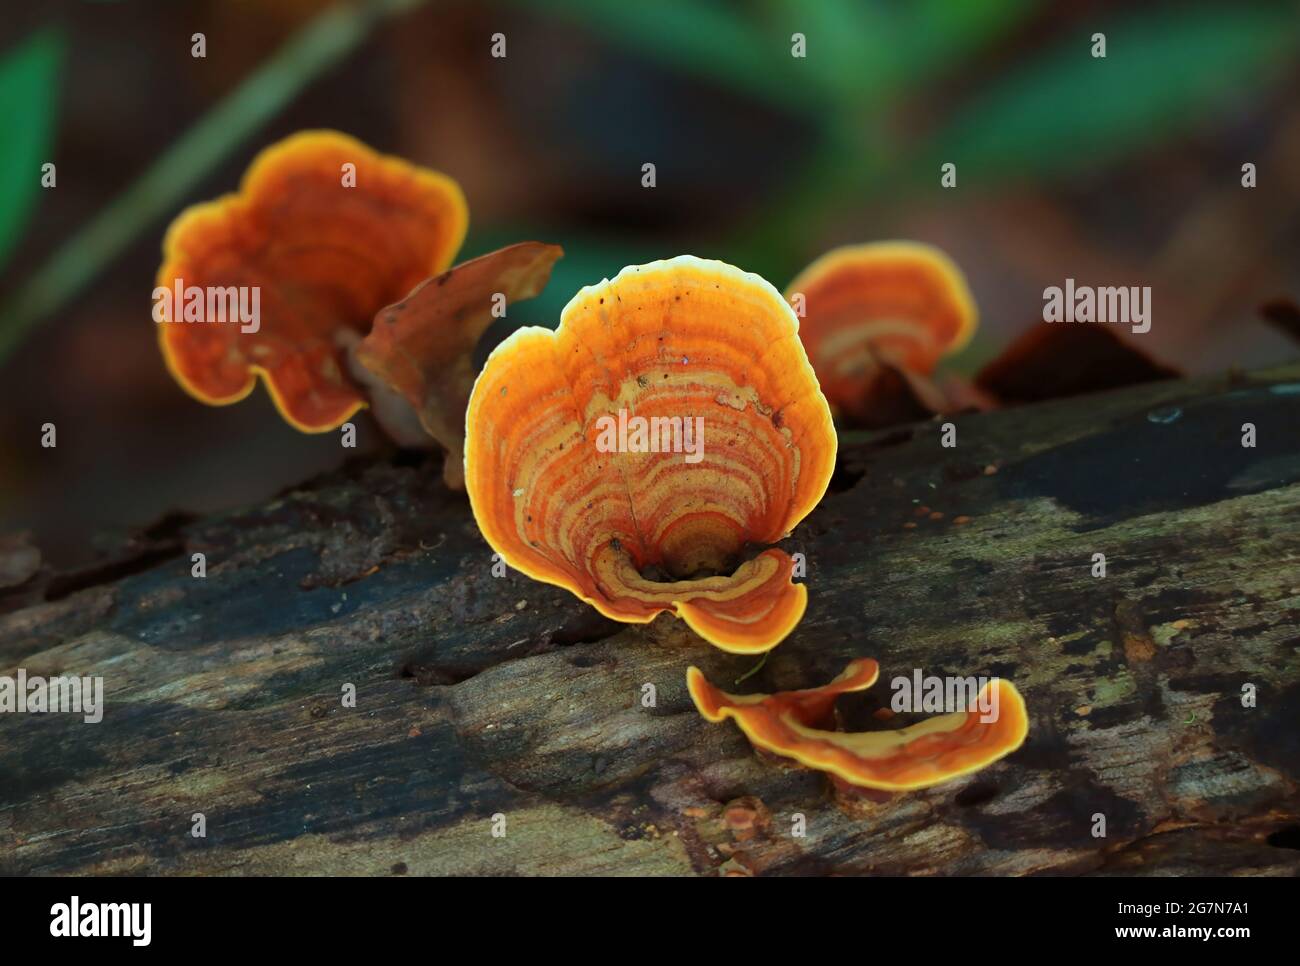 Group of Pycnoporus Sanguineus Wild Mushrooms Growing on the Dead Timber Stock Photo